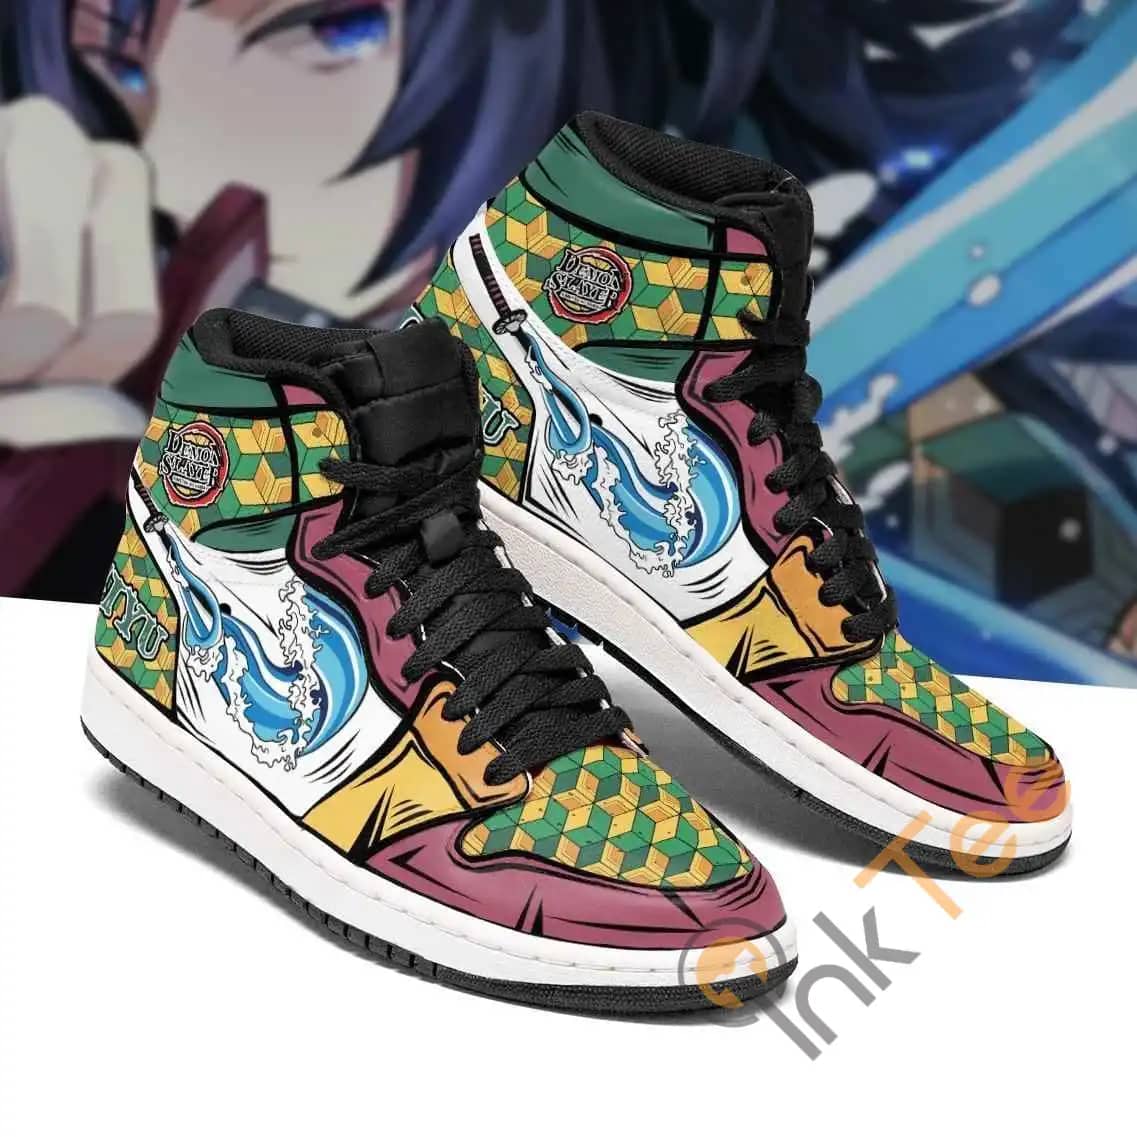 Giyu Costume Demon Slayer Sneakers Anime Air Jordan Shoes